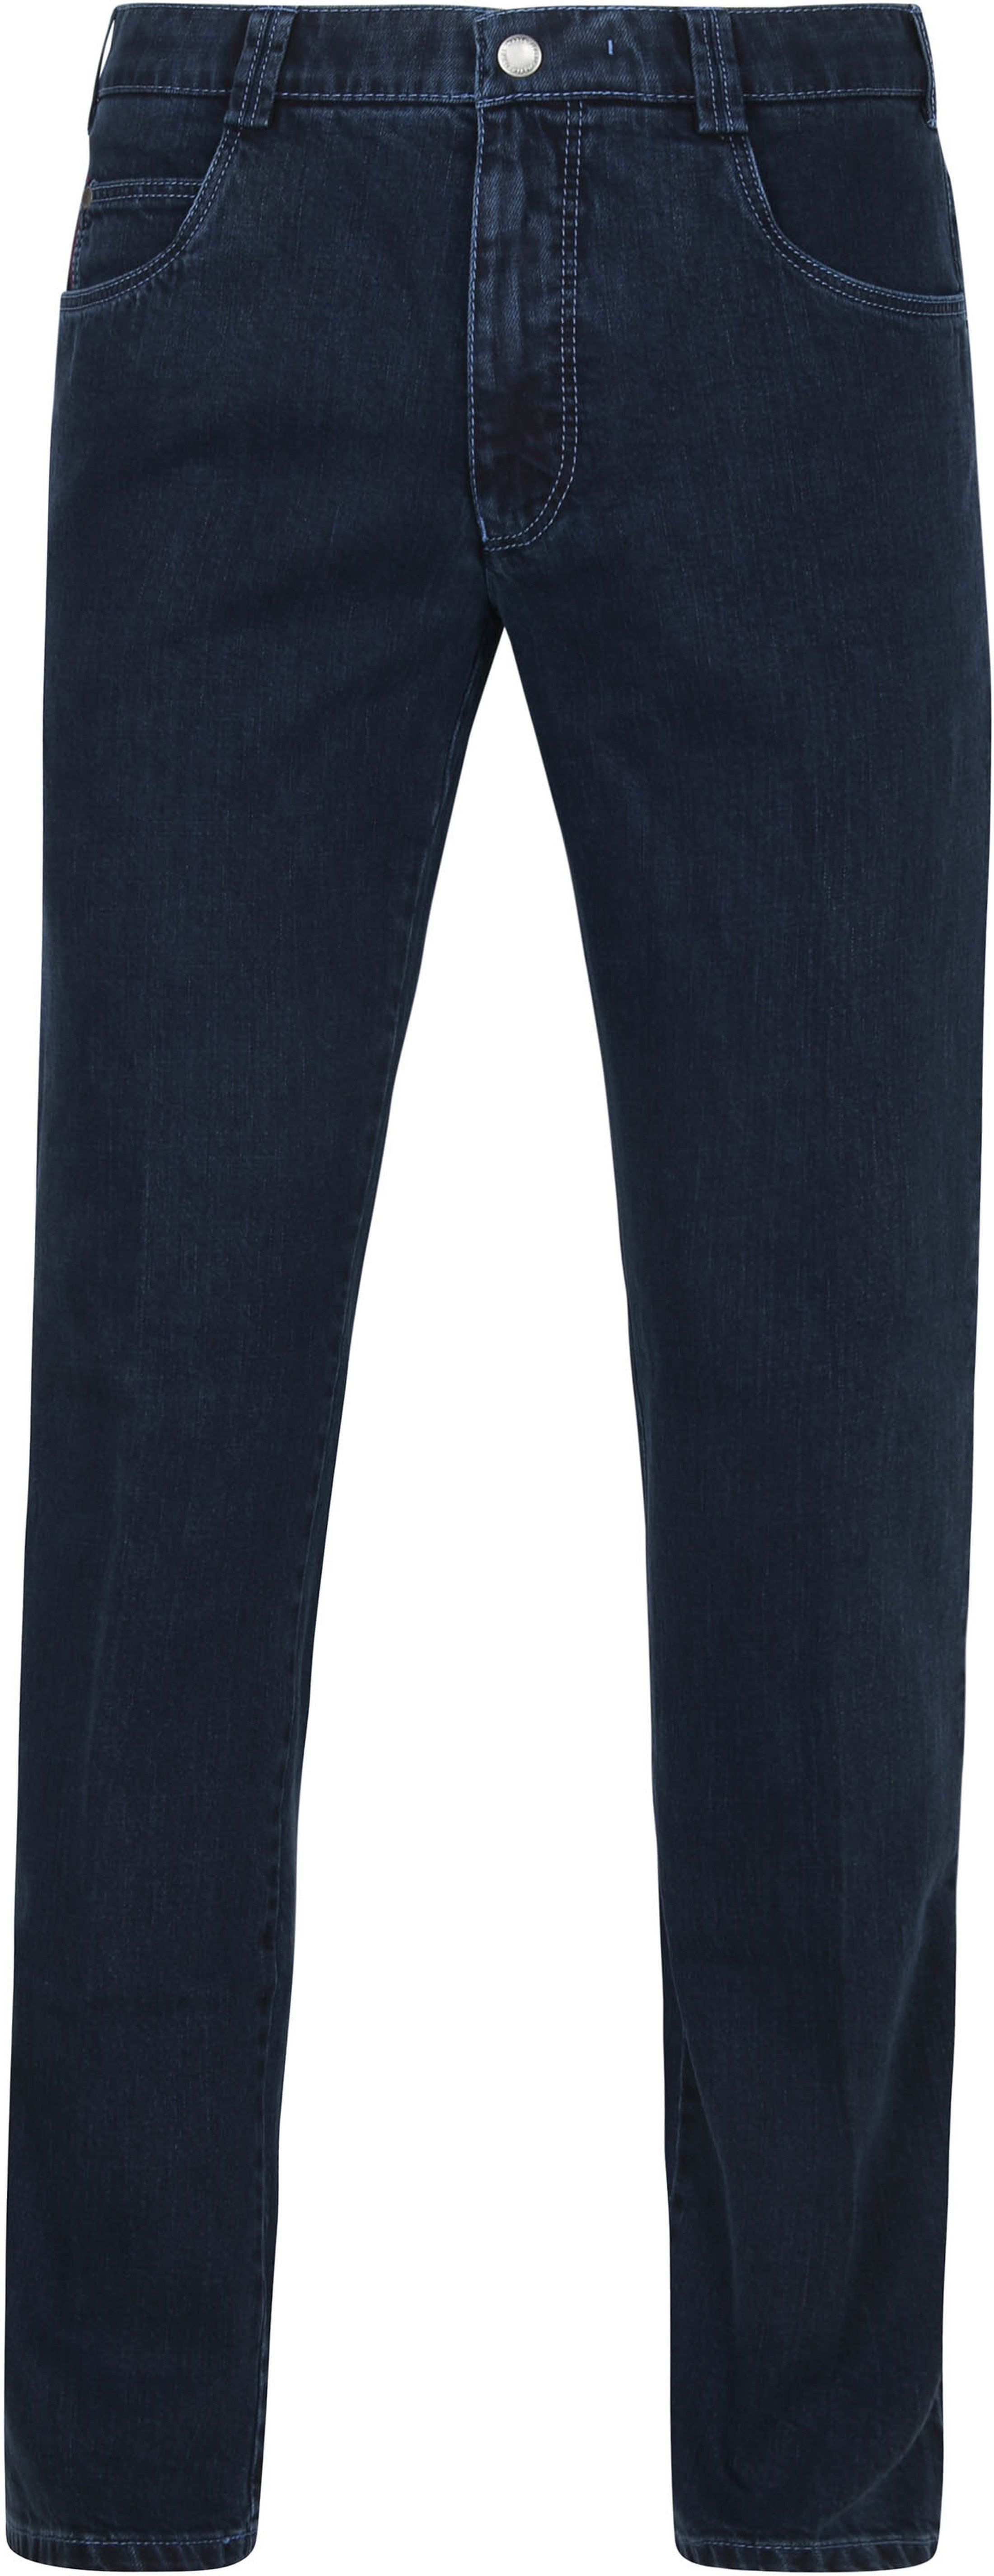 Meyer Jeans Pants Diego Navy Dark Blue Blue size W 34